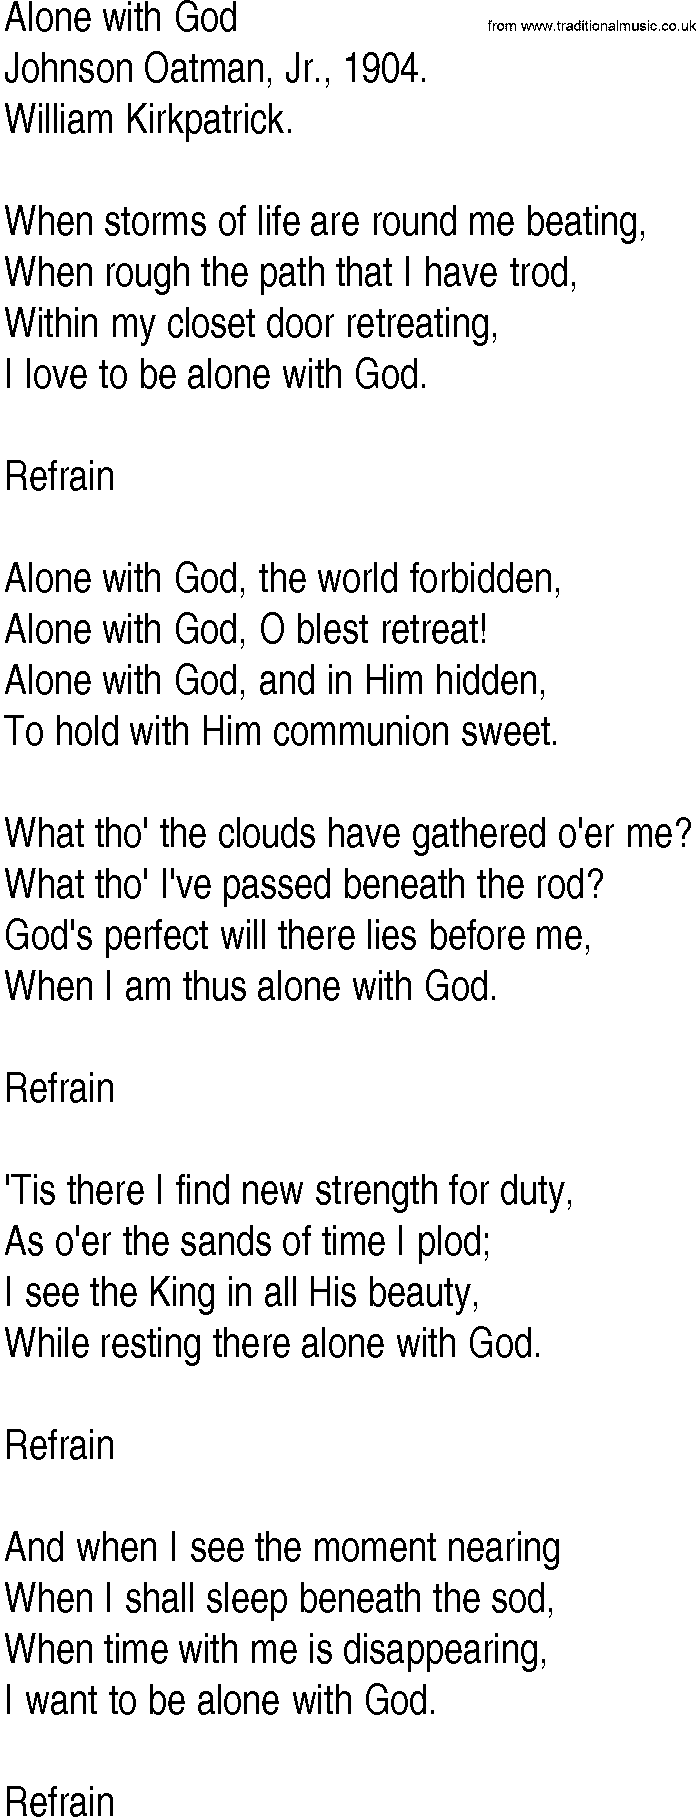 Hymn and Gospel Song: Alone with God by Johnson Oatman Jr lyrics